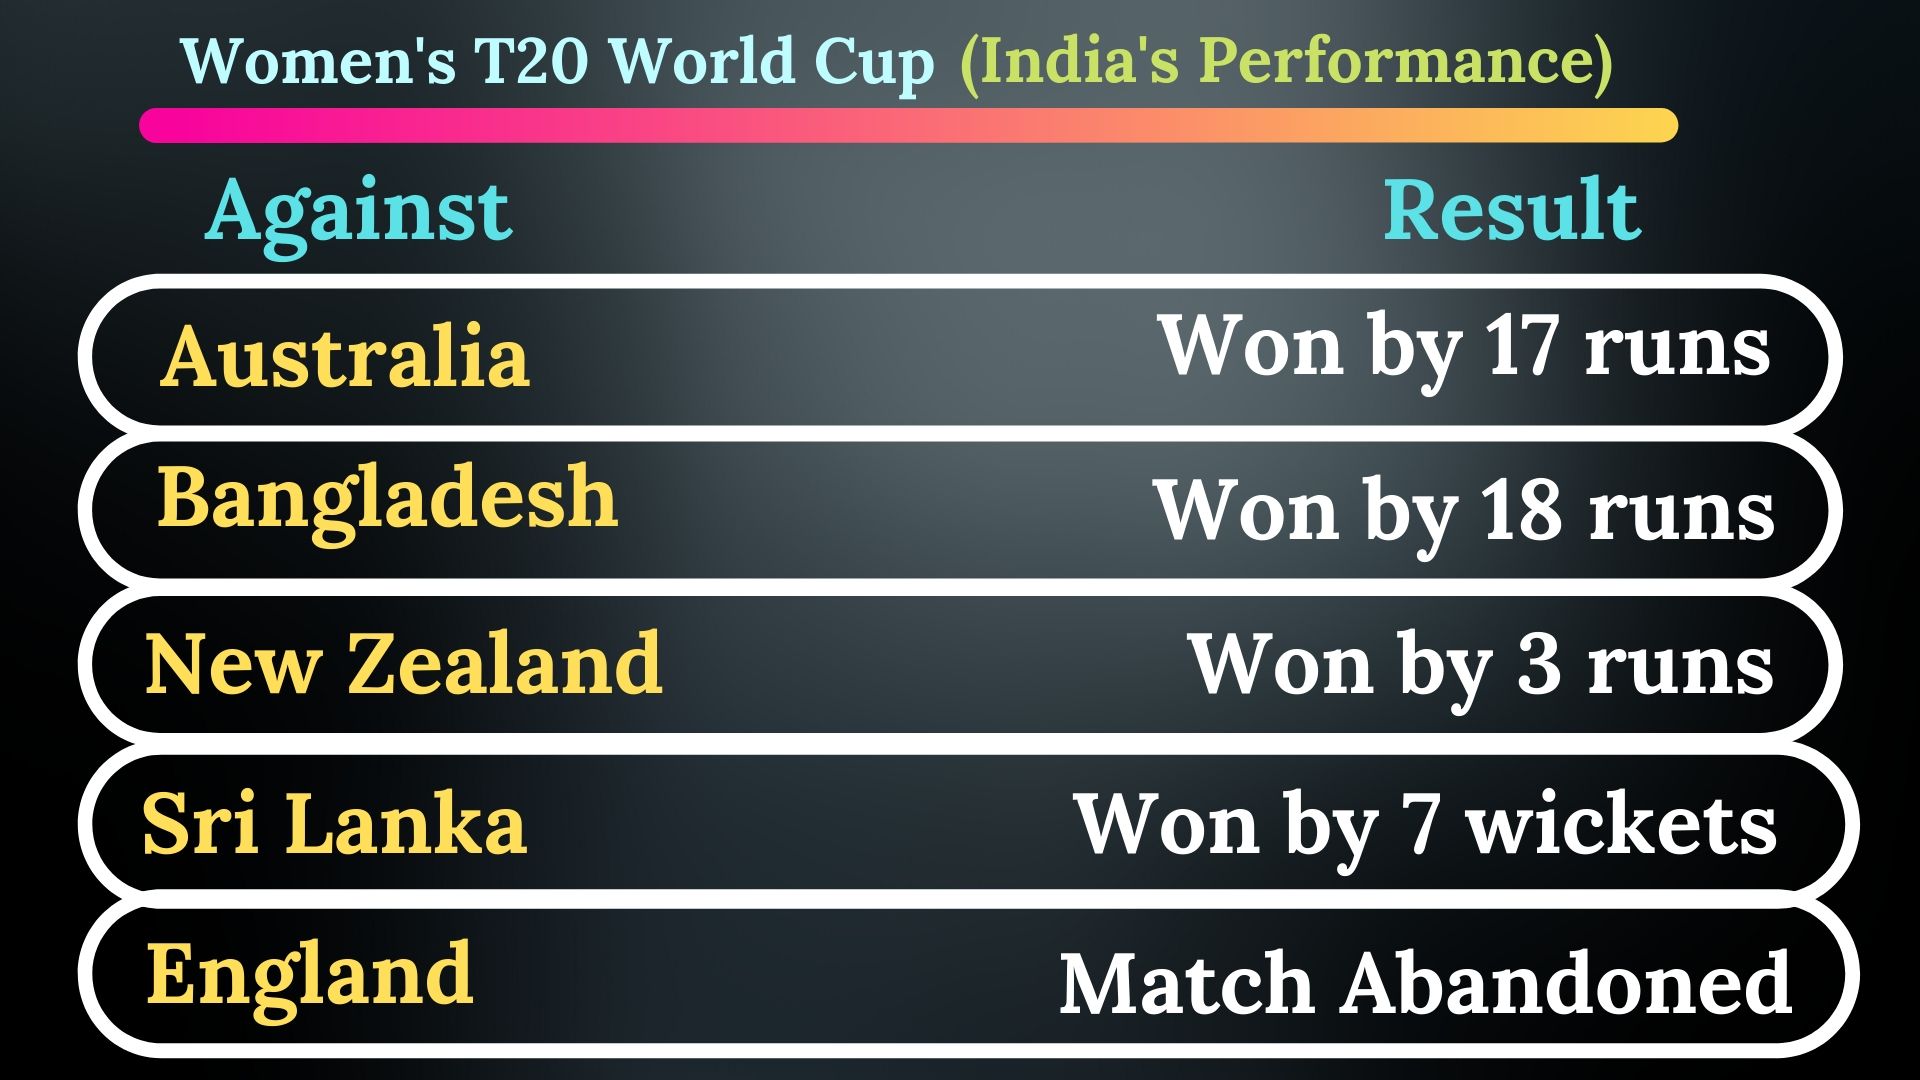 India, Australia,  ICC Women's T20 World Cup final, Prime Minister Narendra Modi